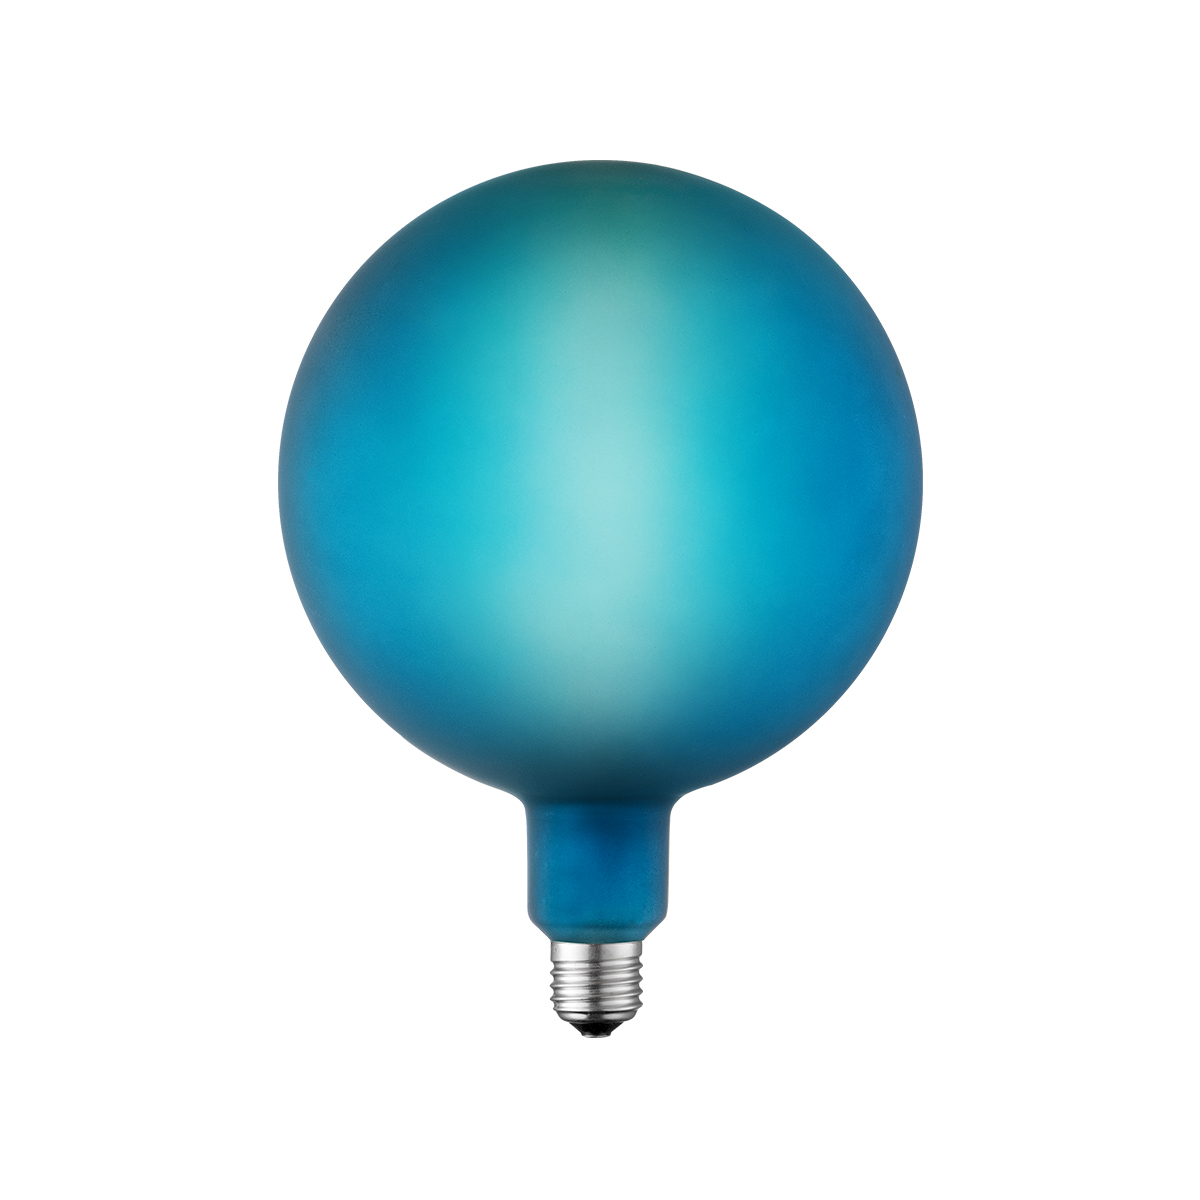 Tangla lighting - TLB-9006-04BL - LED Light Bulb Single Spiral filament - G180 4W blue opal - non dimmable - E27